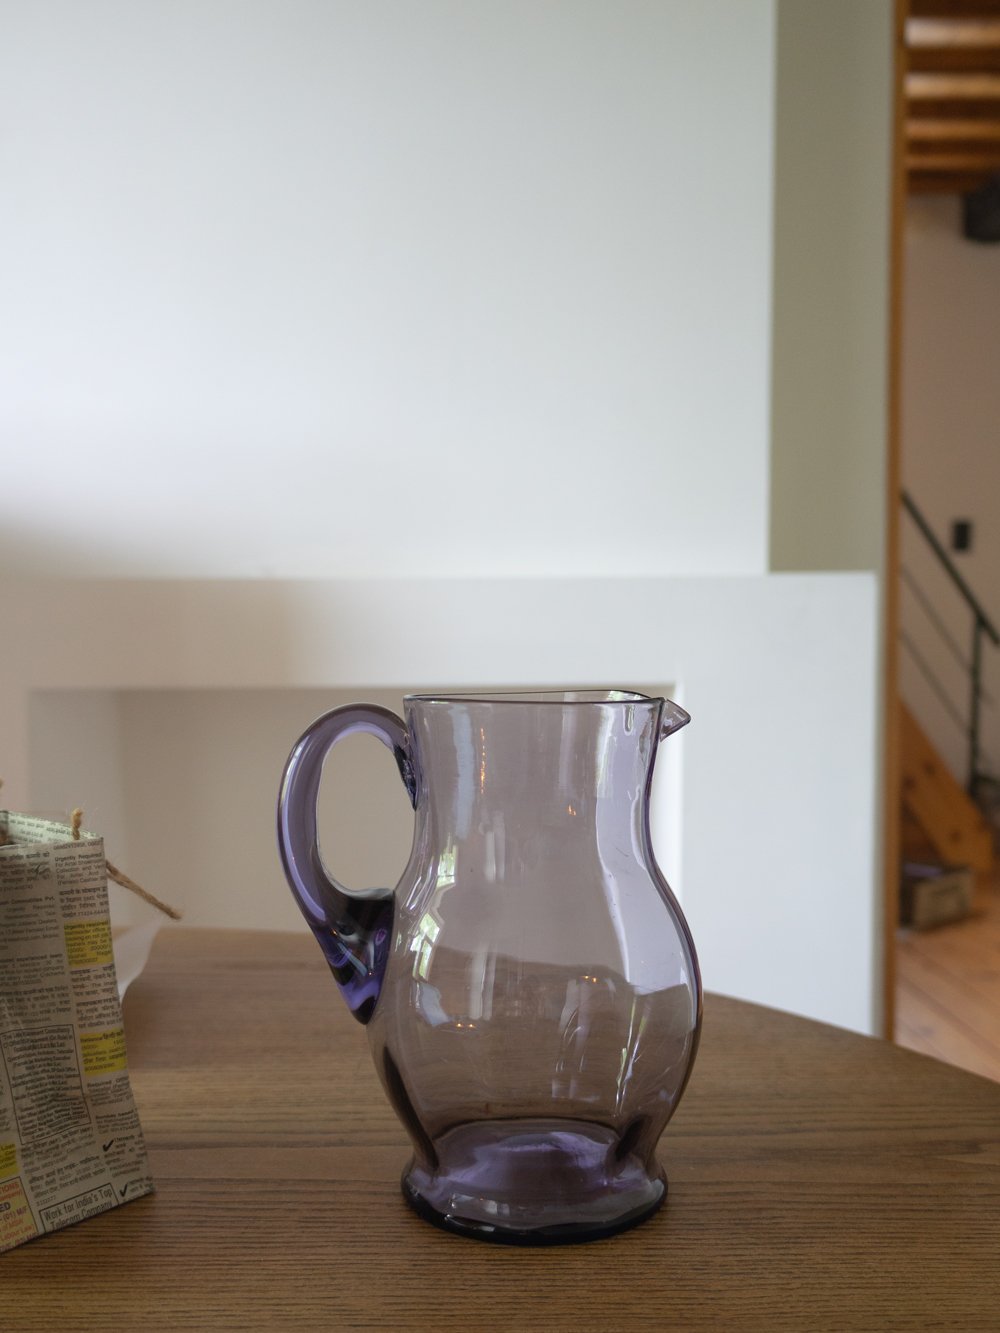 Image of purple pitcher